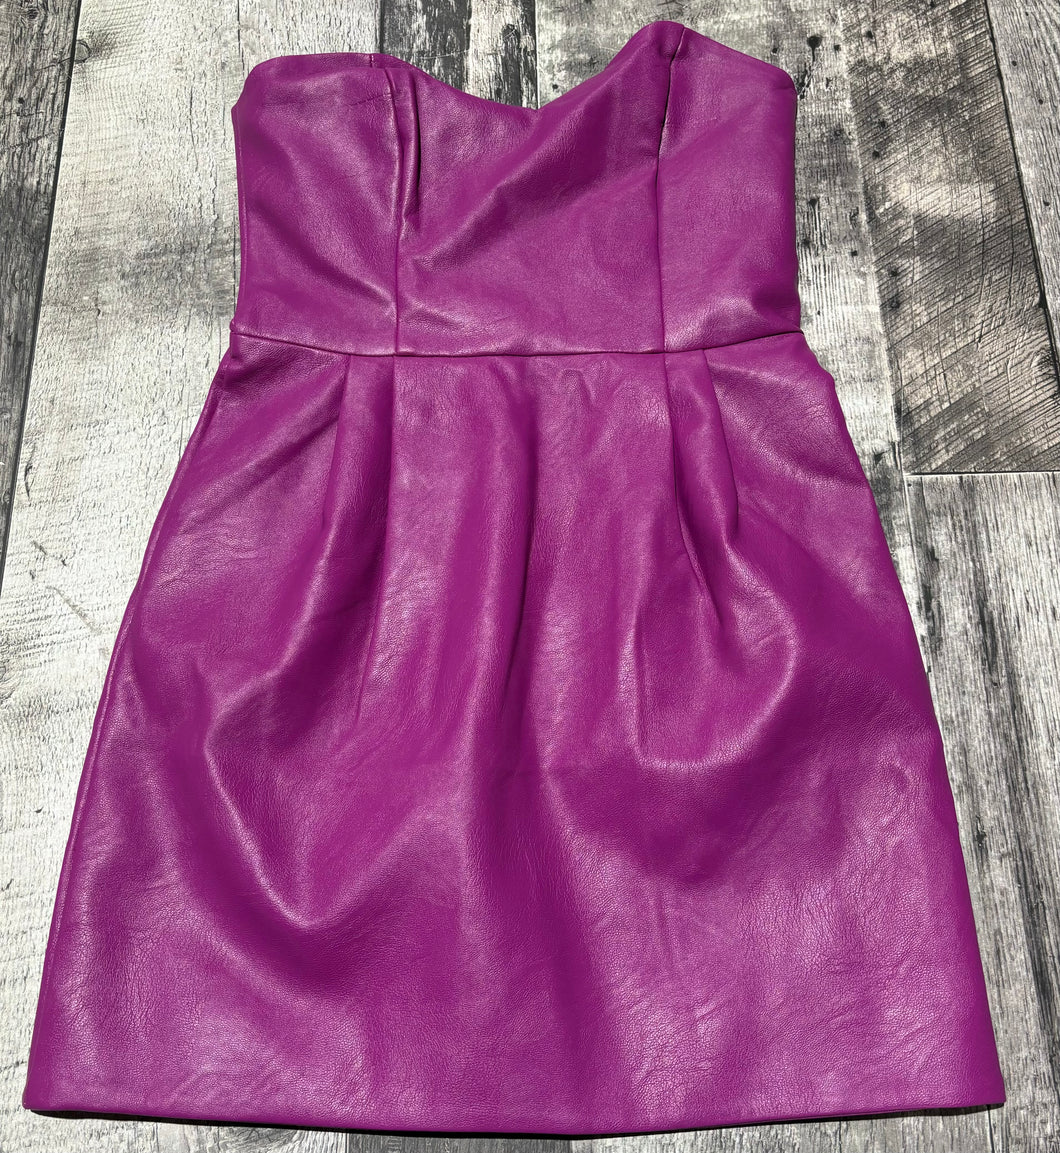 Topshop magenta strapless dress - Hers size 4